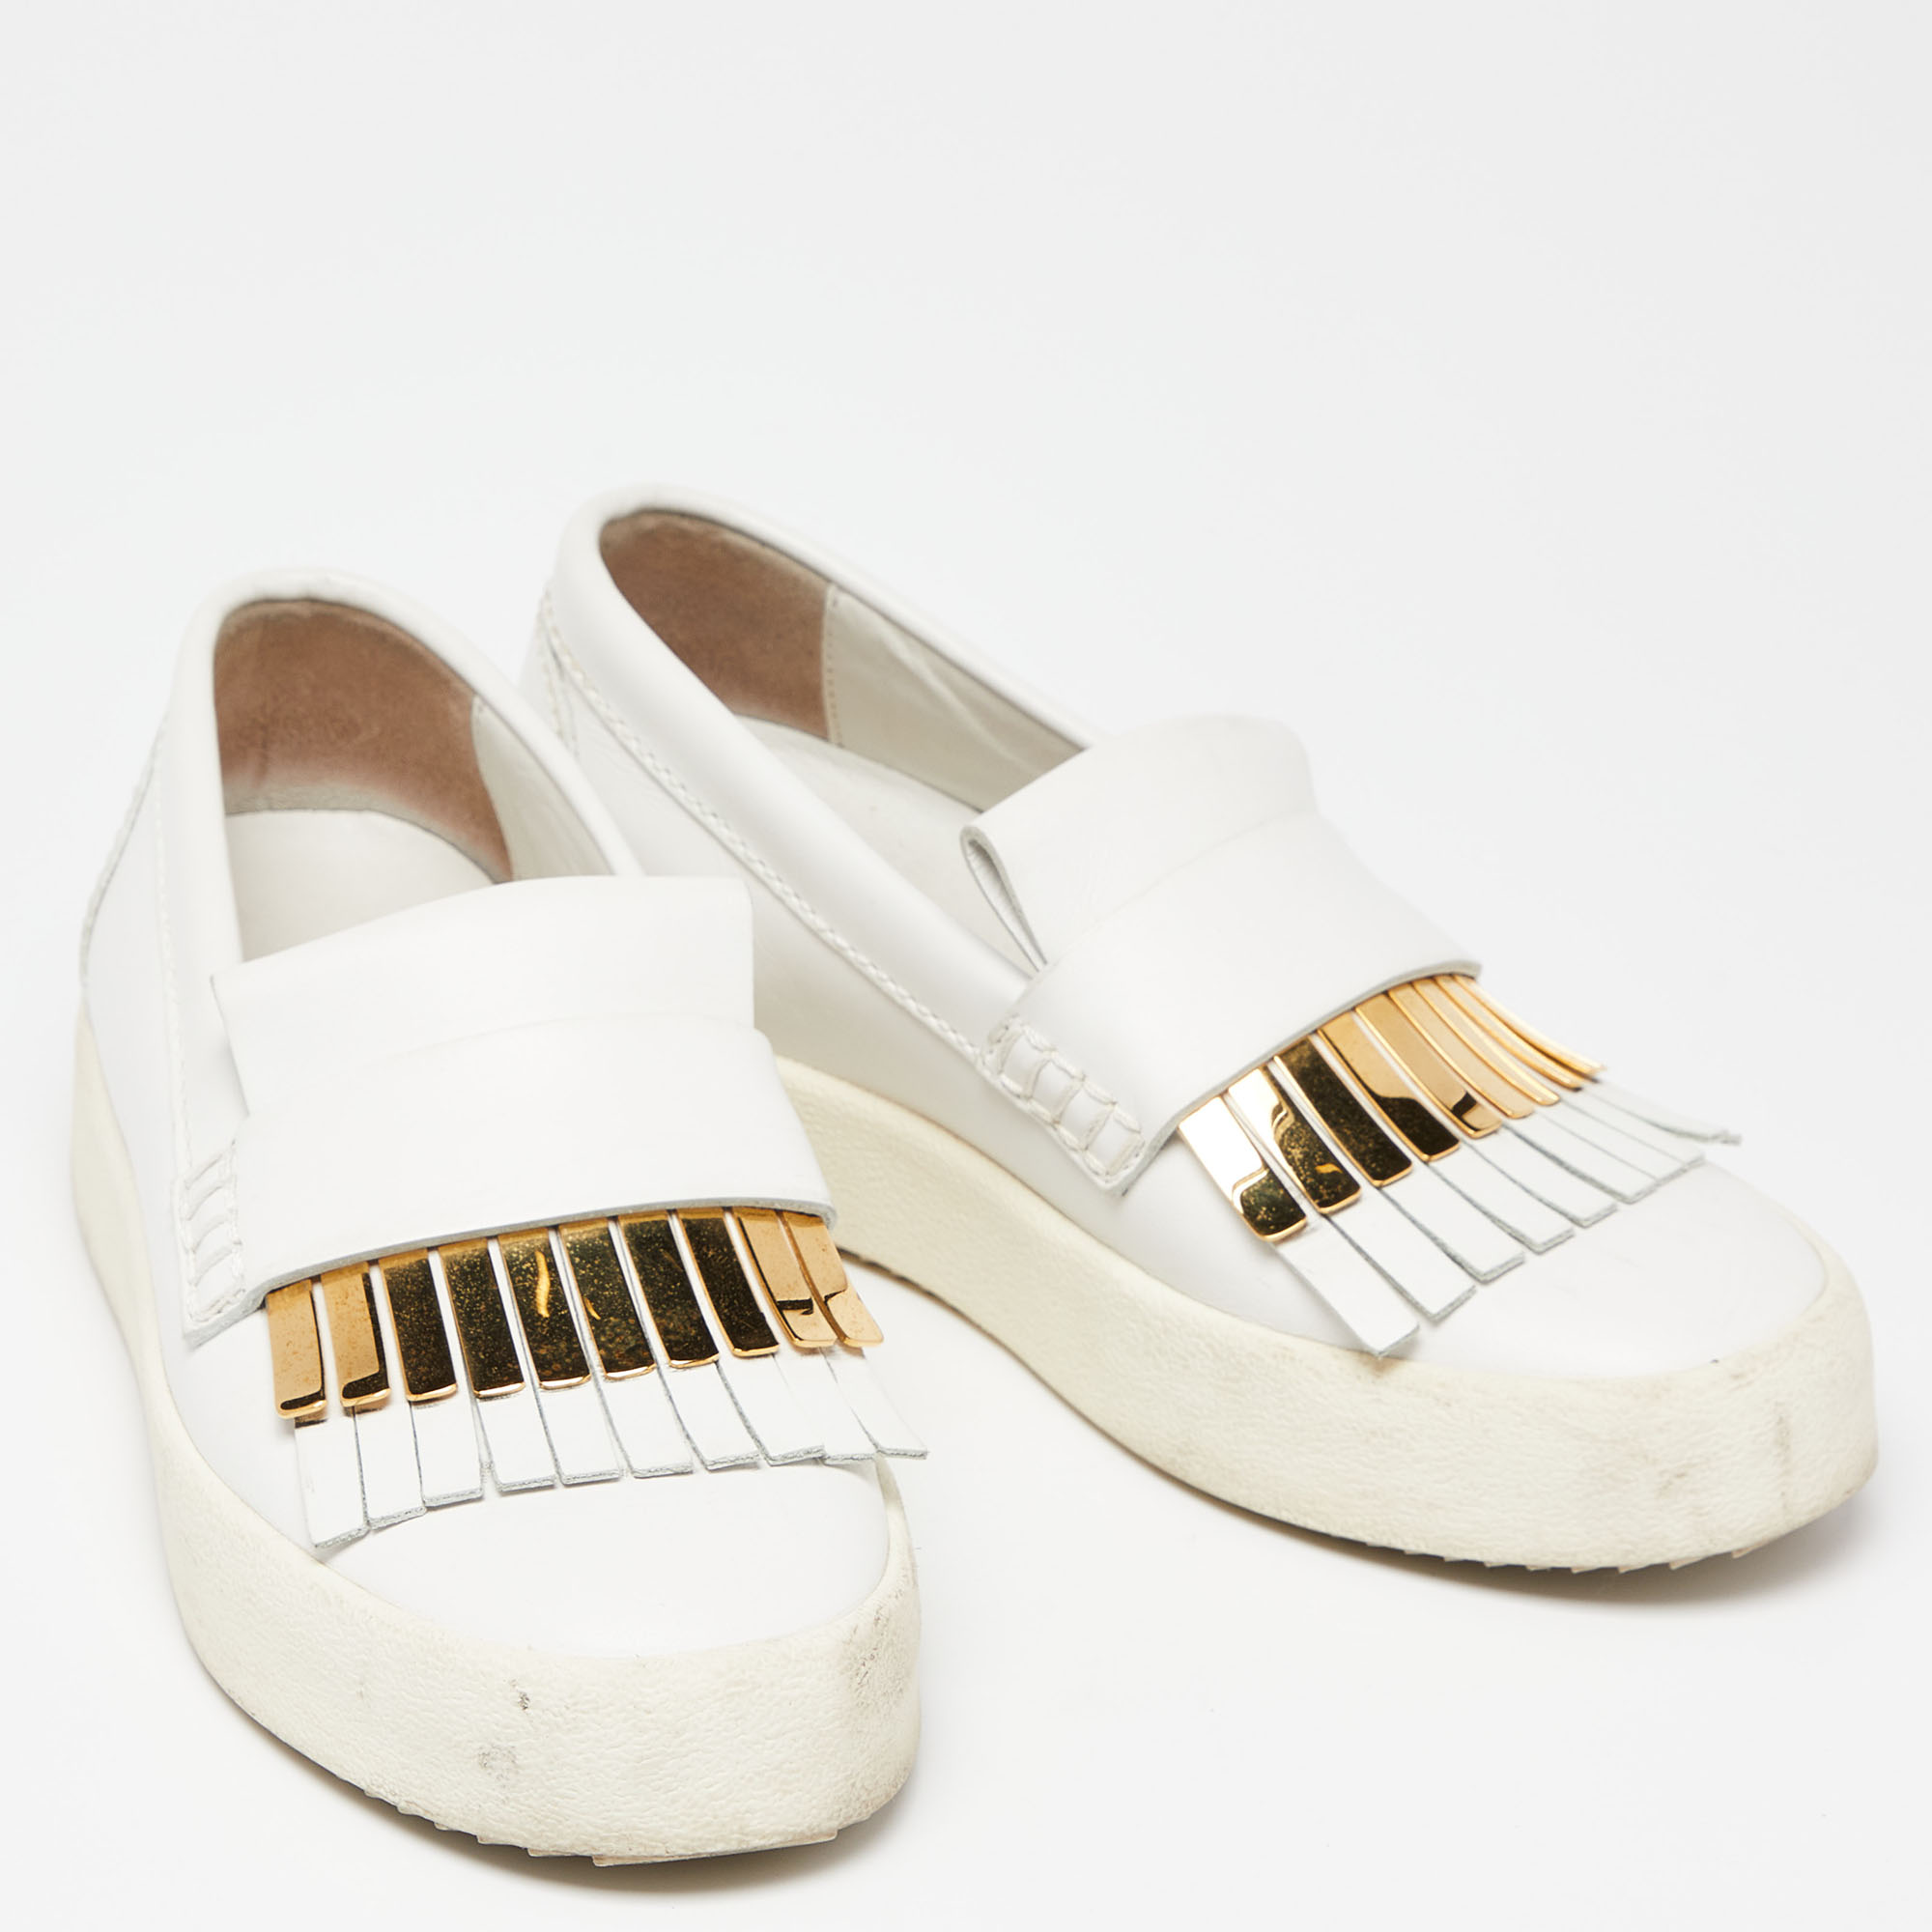 Giuseppe Zanotti White Leather Fringed Slip On Sneakers Size 37.5